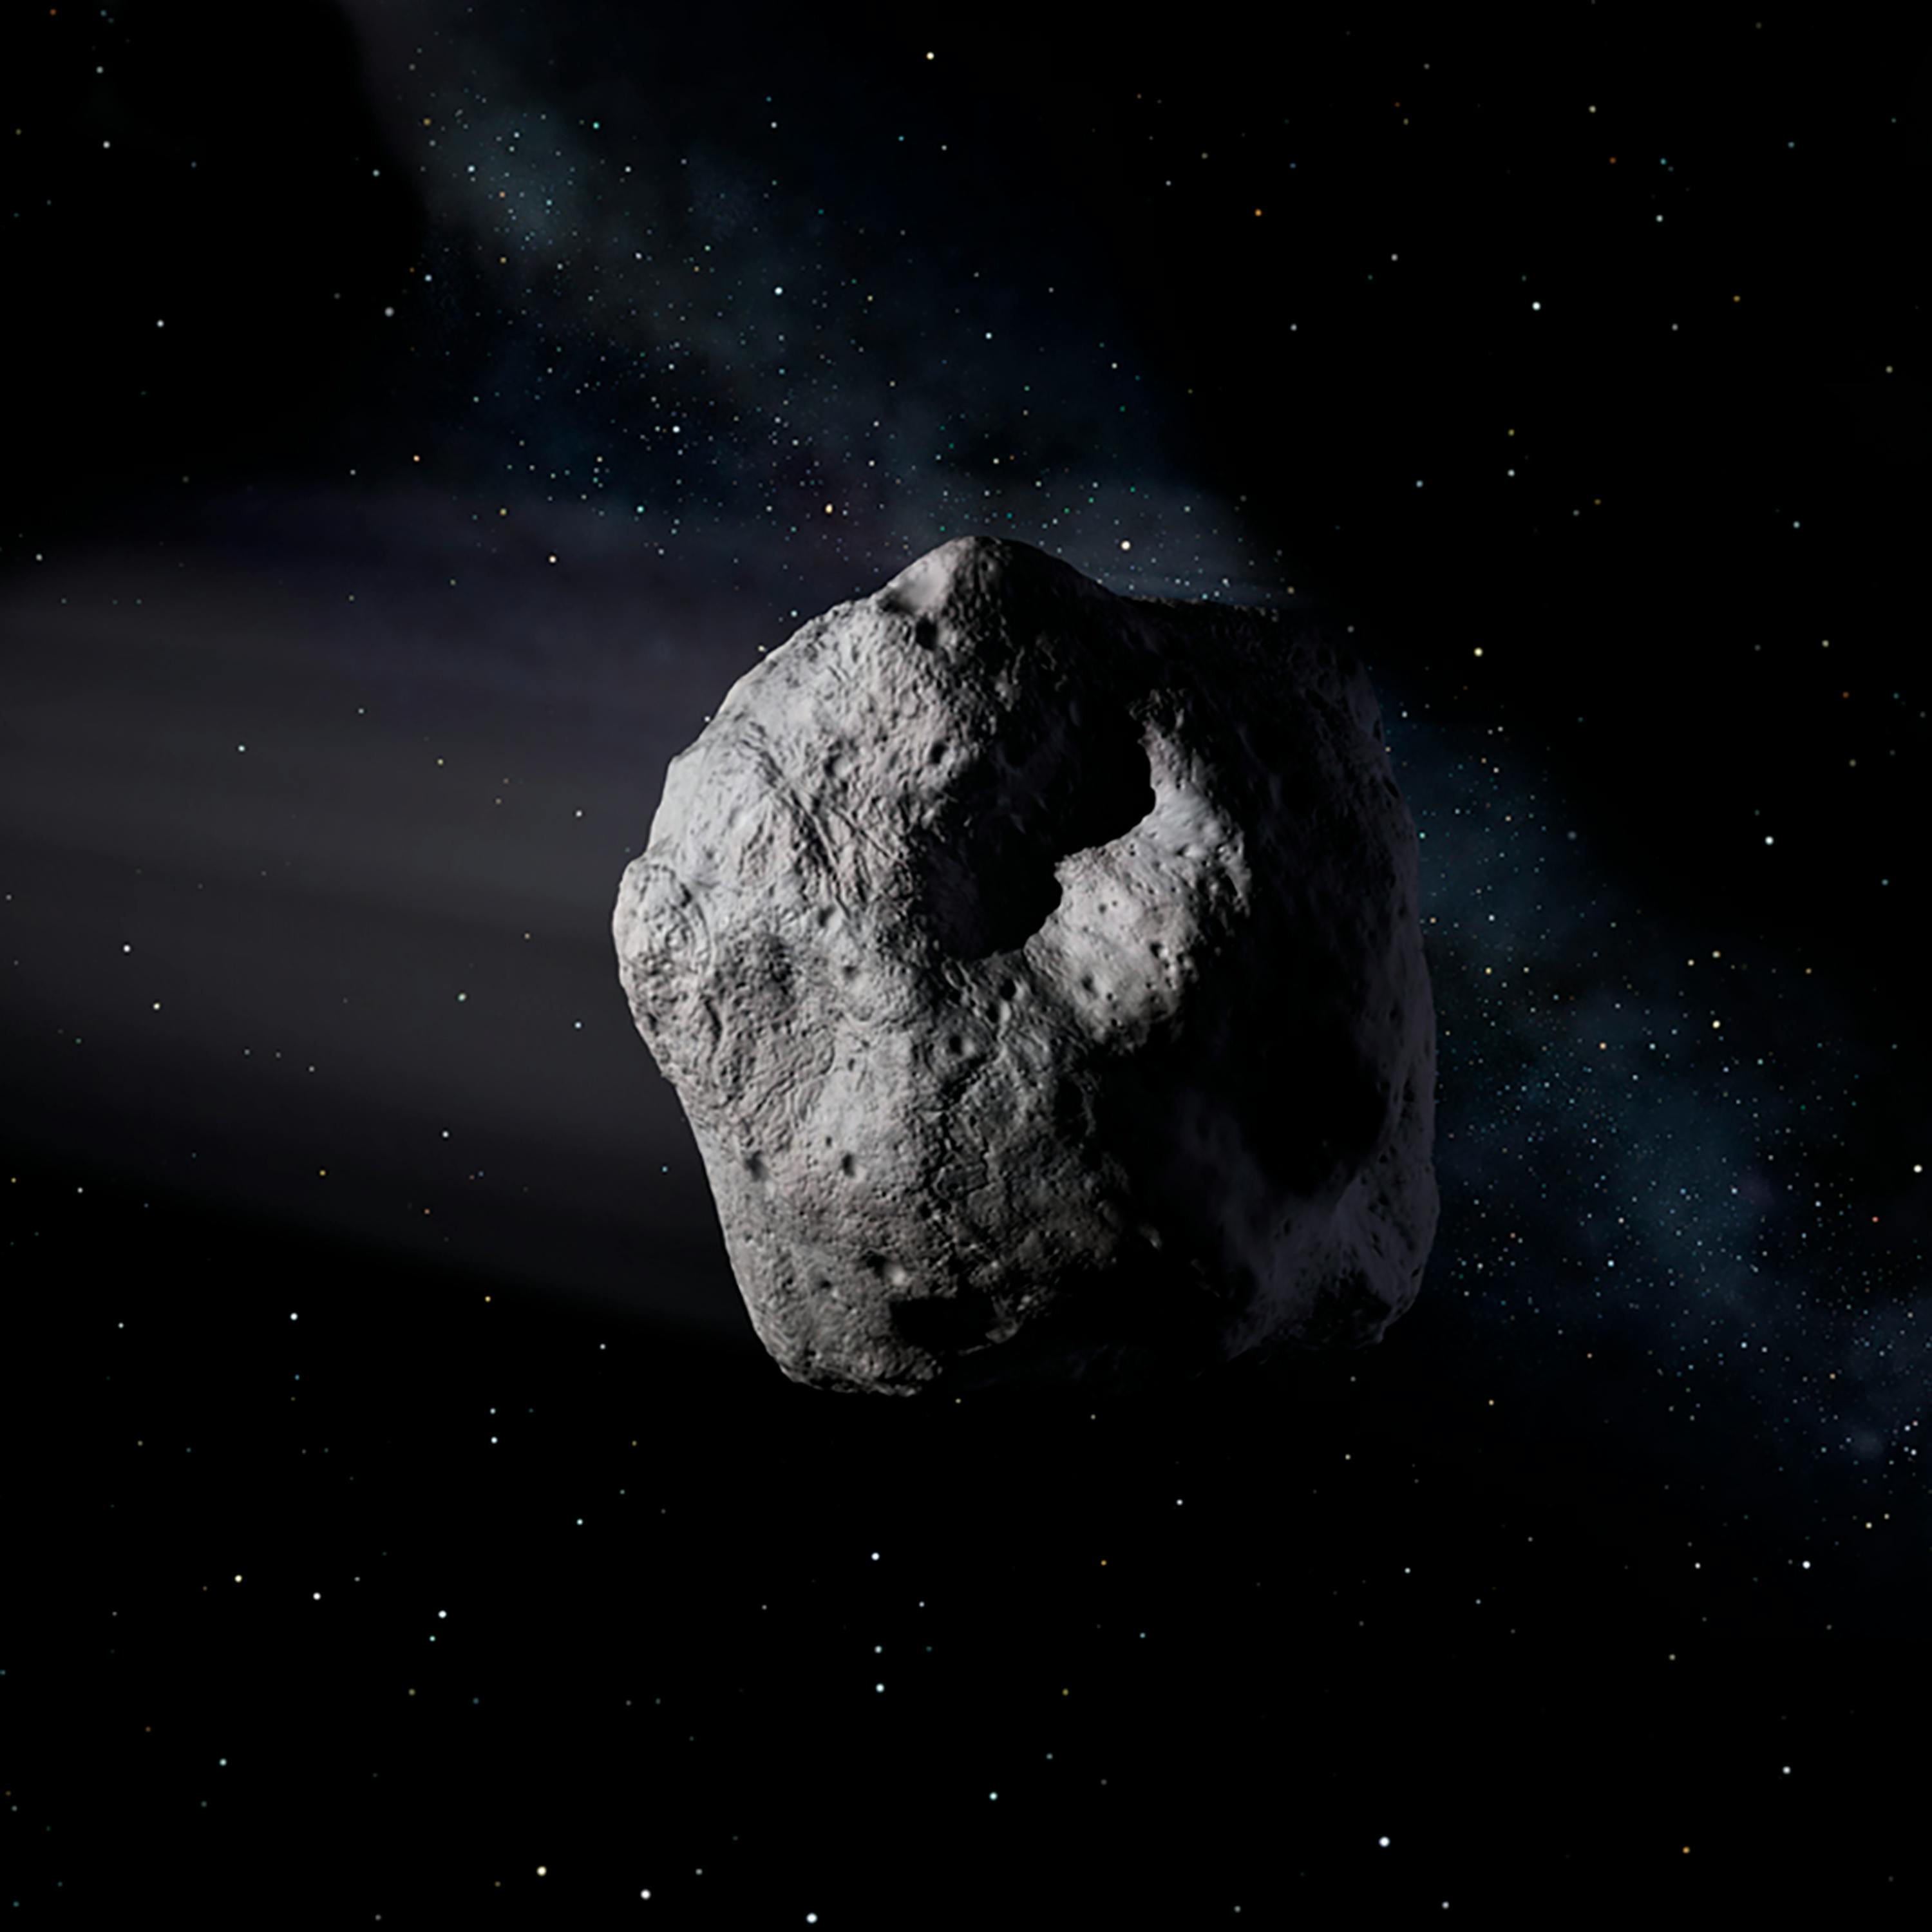 OSIRIS-Rex and the Asteroid belt